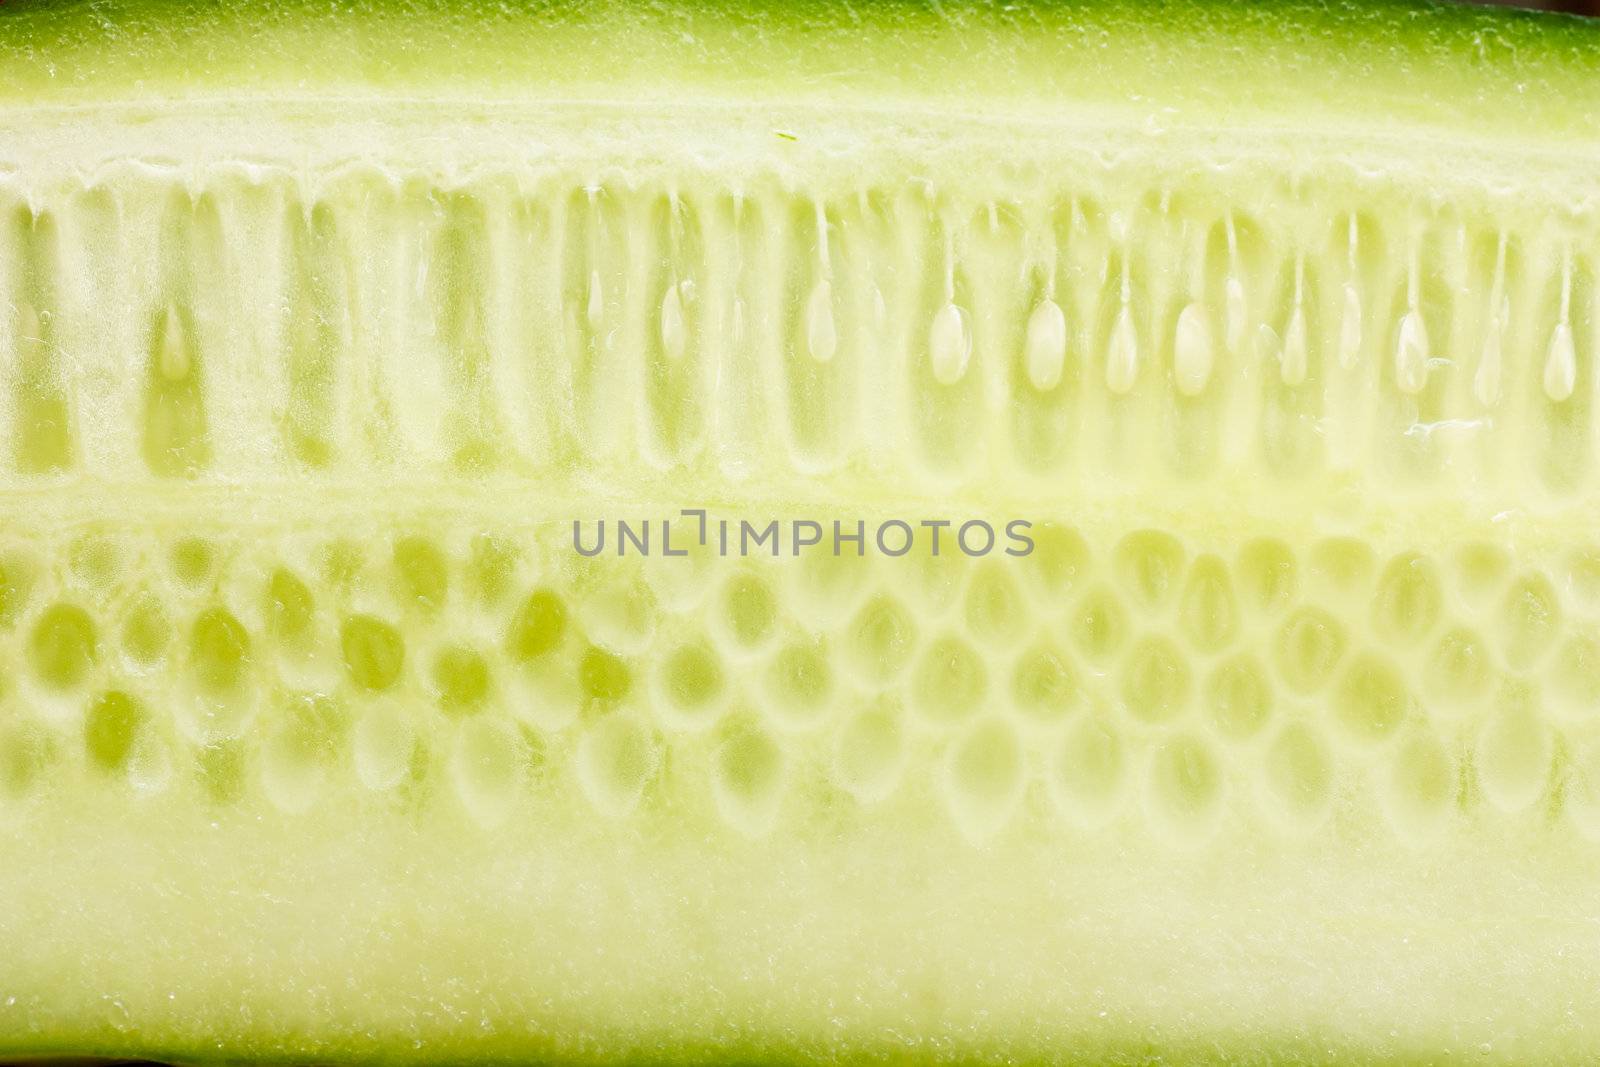 Fresh cut of cucumber